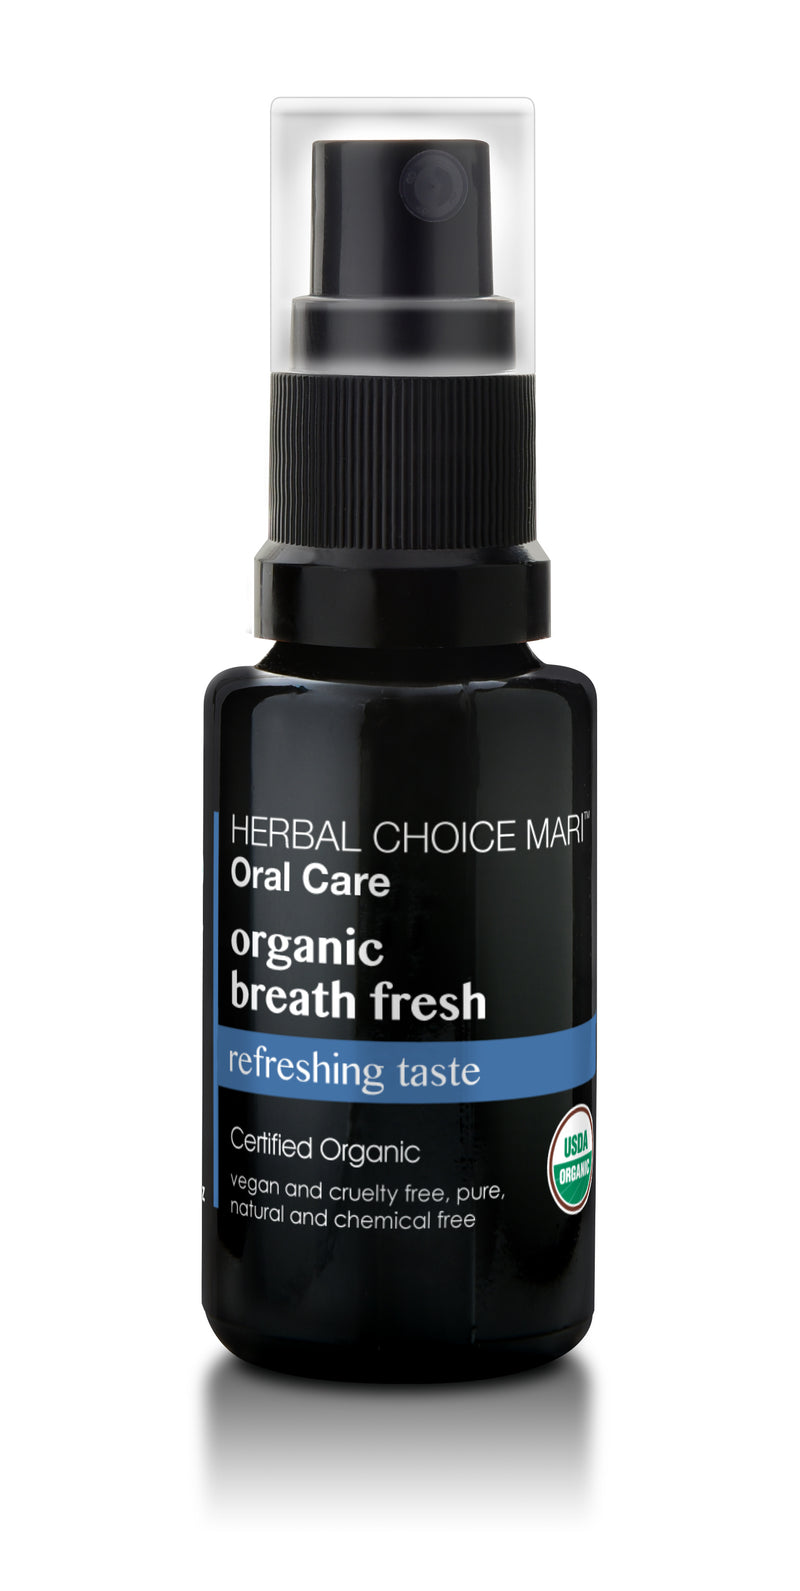 Herbal Choice Mari Organic Breath Fresh - Herbal Choice Mari Organic Breath Fresh - Herbal Choice Mari Organic Breath Fresh